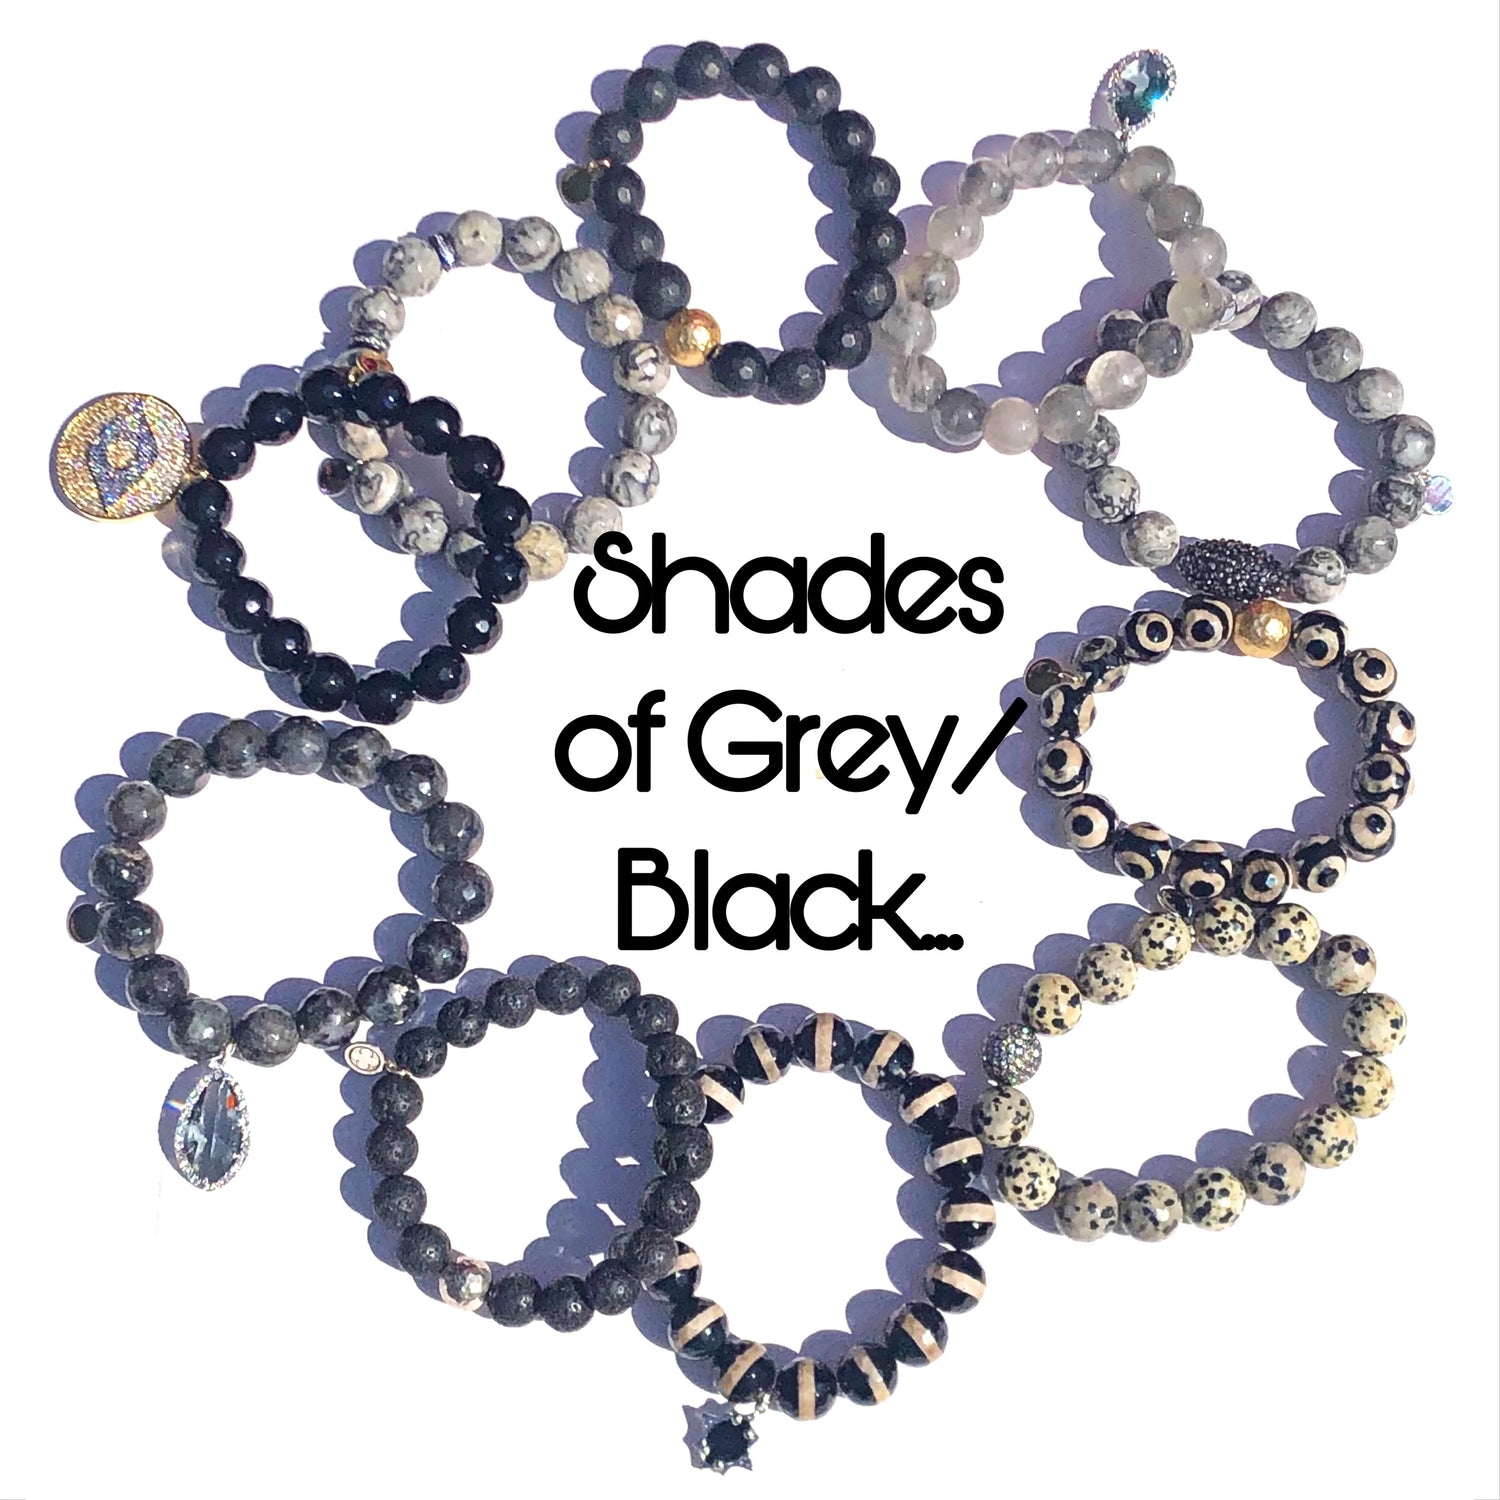 Shades of Grey/Black